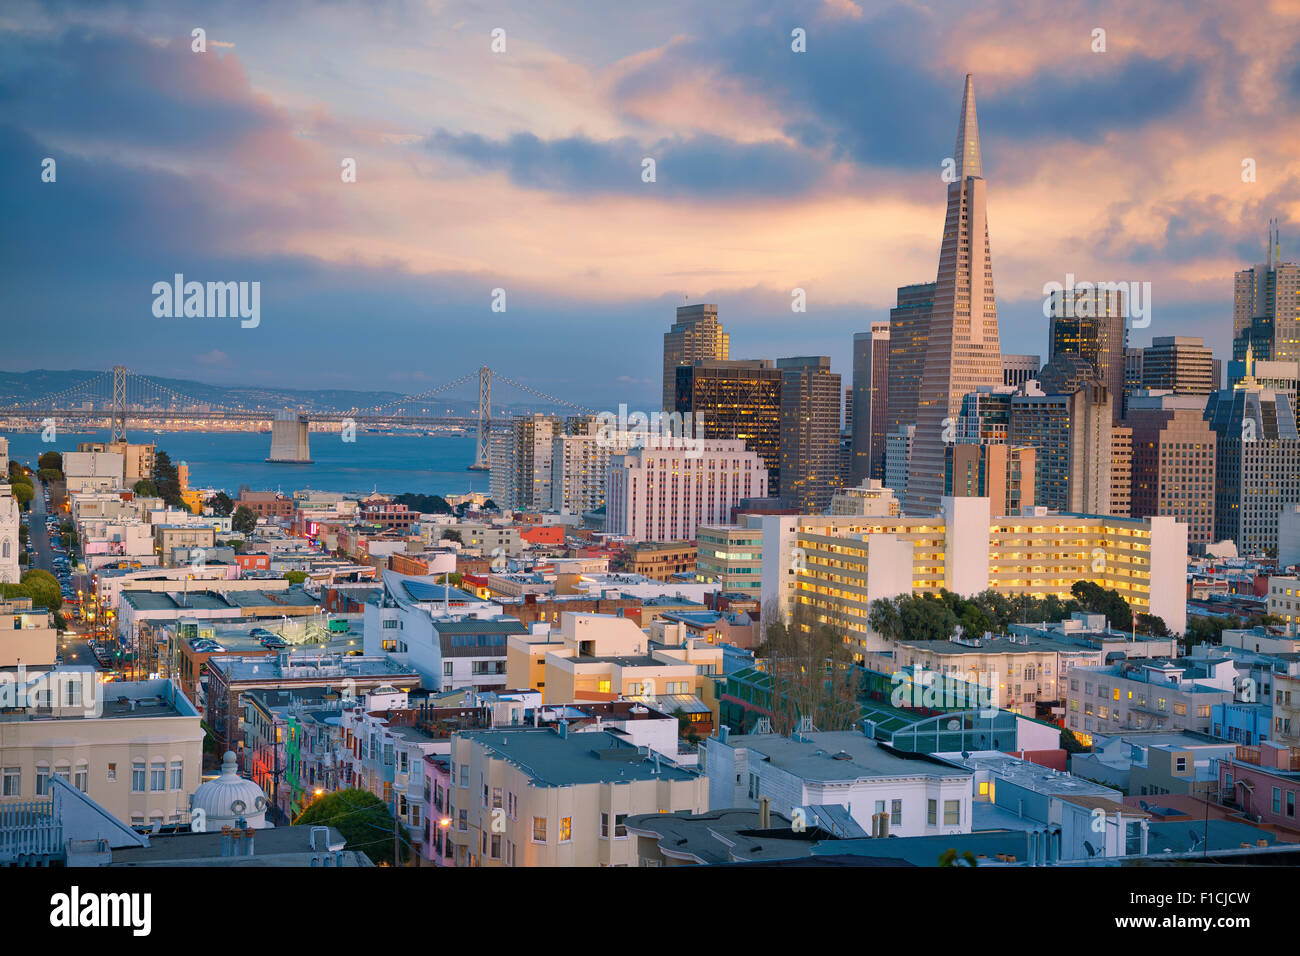 San Francisco. Image of San Francisco skyline at sunset. Stock Photo